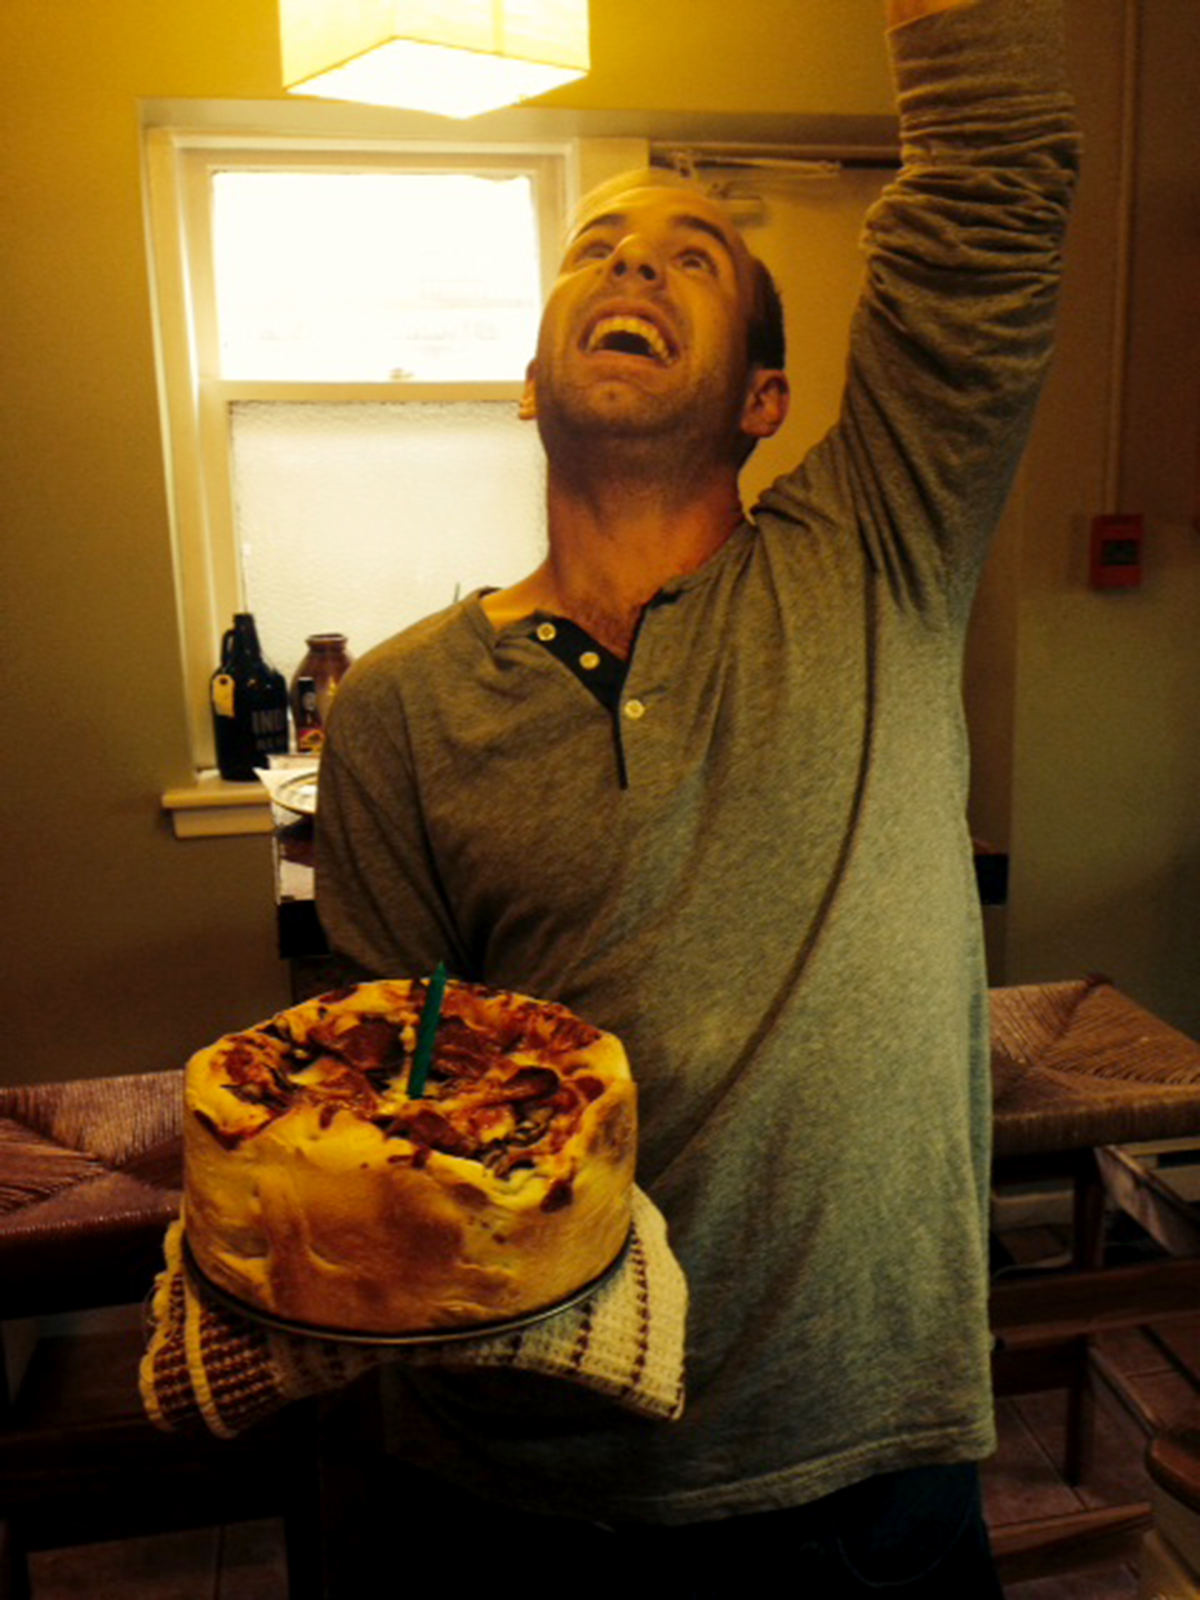 PHOTO: Pizza Birthday Cake